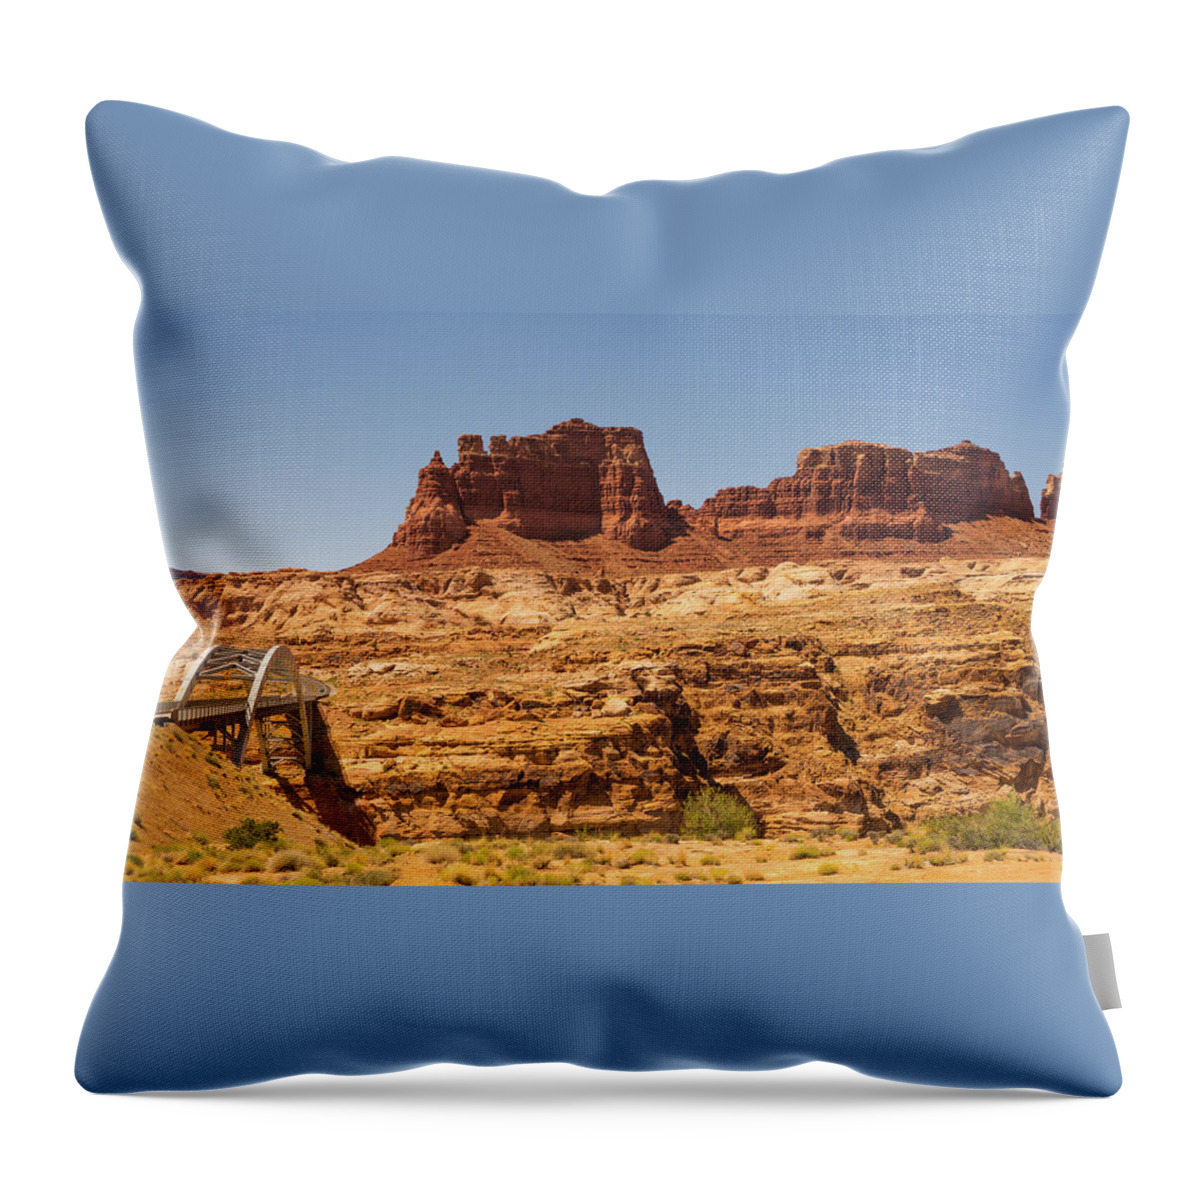 Utah Throw Pillow featuring the photograph Colorado River Bridge Glen Canyon National Recreation Area by Lawrence S Richardson Jr